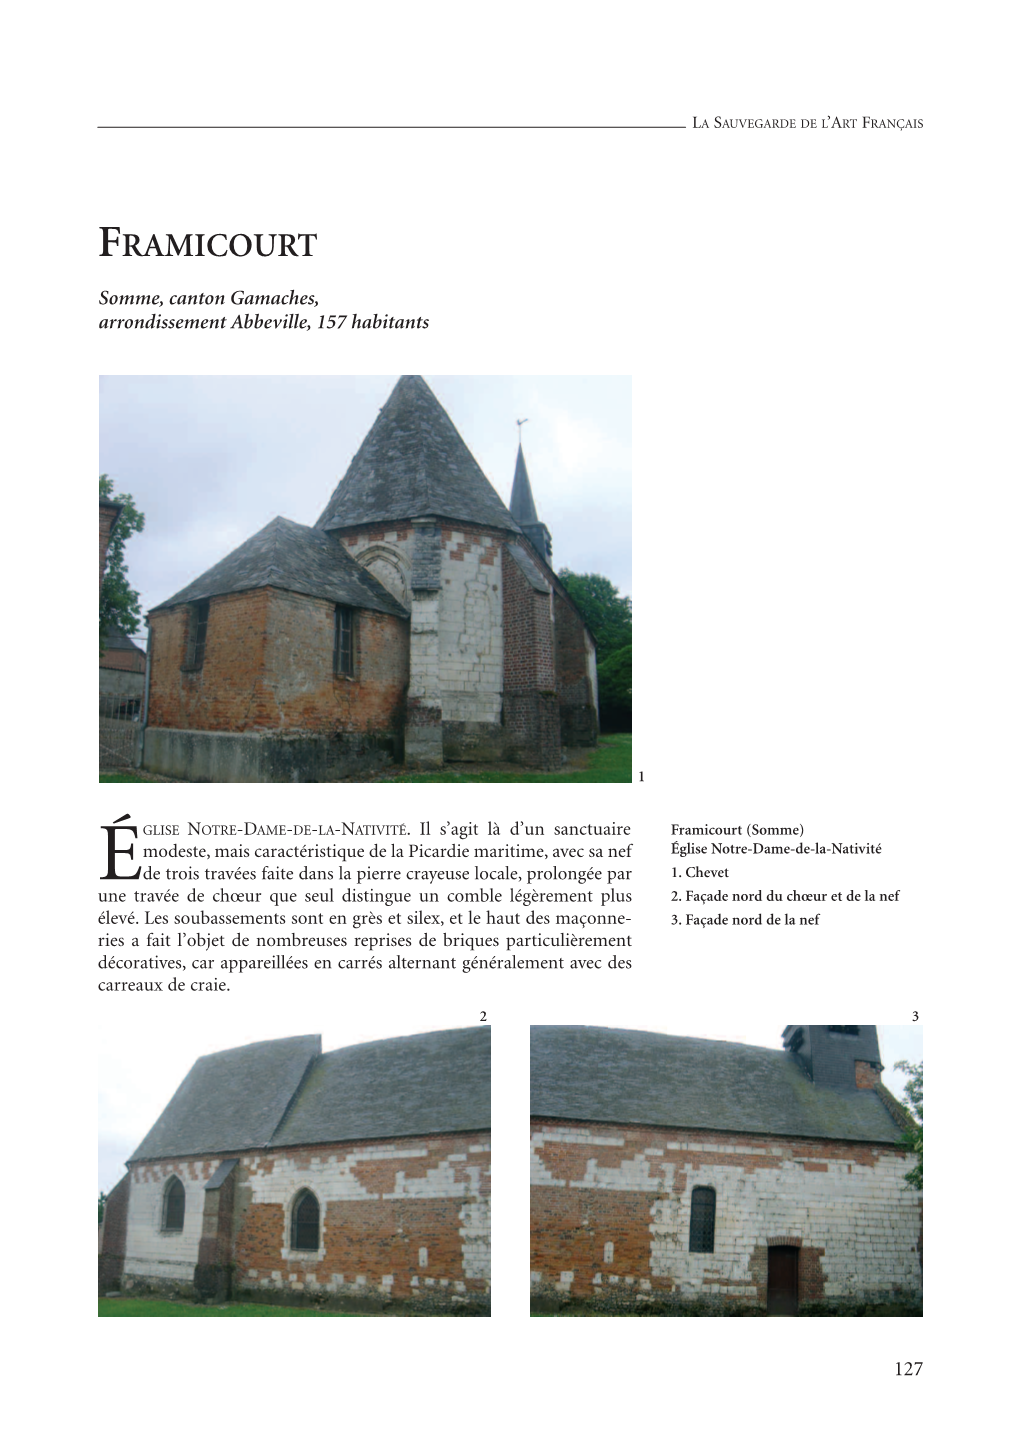 FRAMICOURT Somme, Canton Gamaches, Arrondissement Abbeville, 157 Habitants